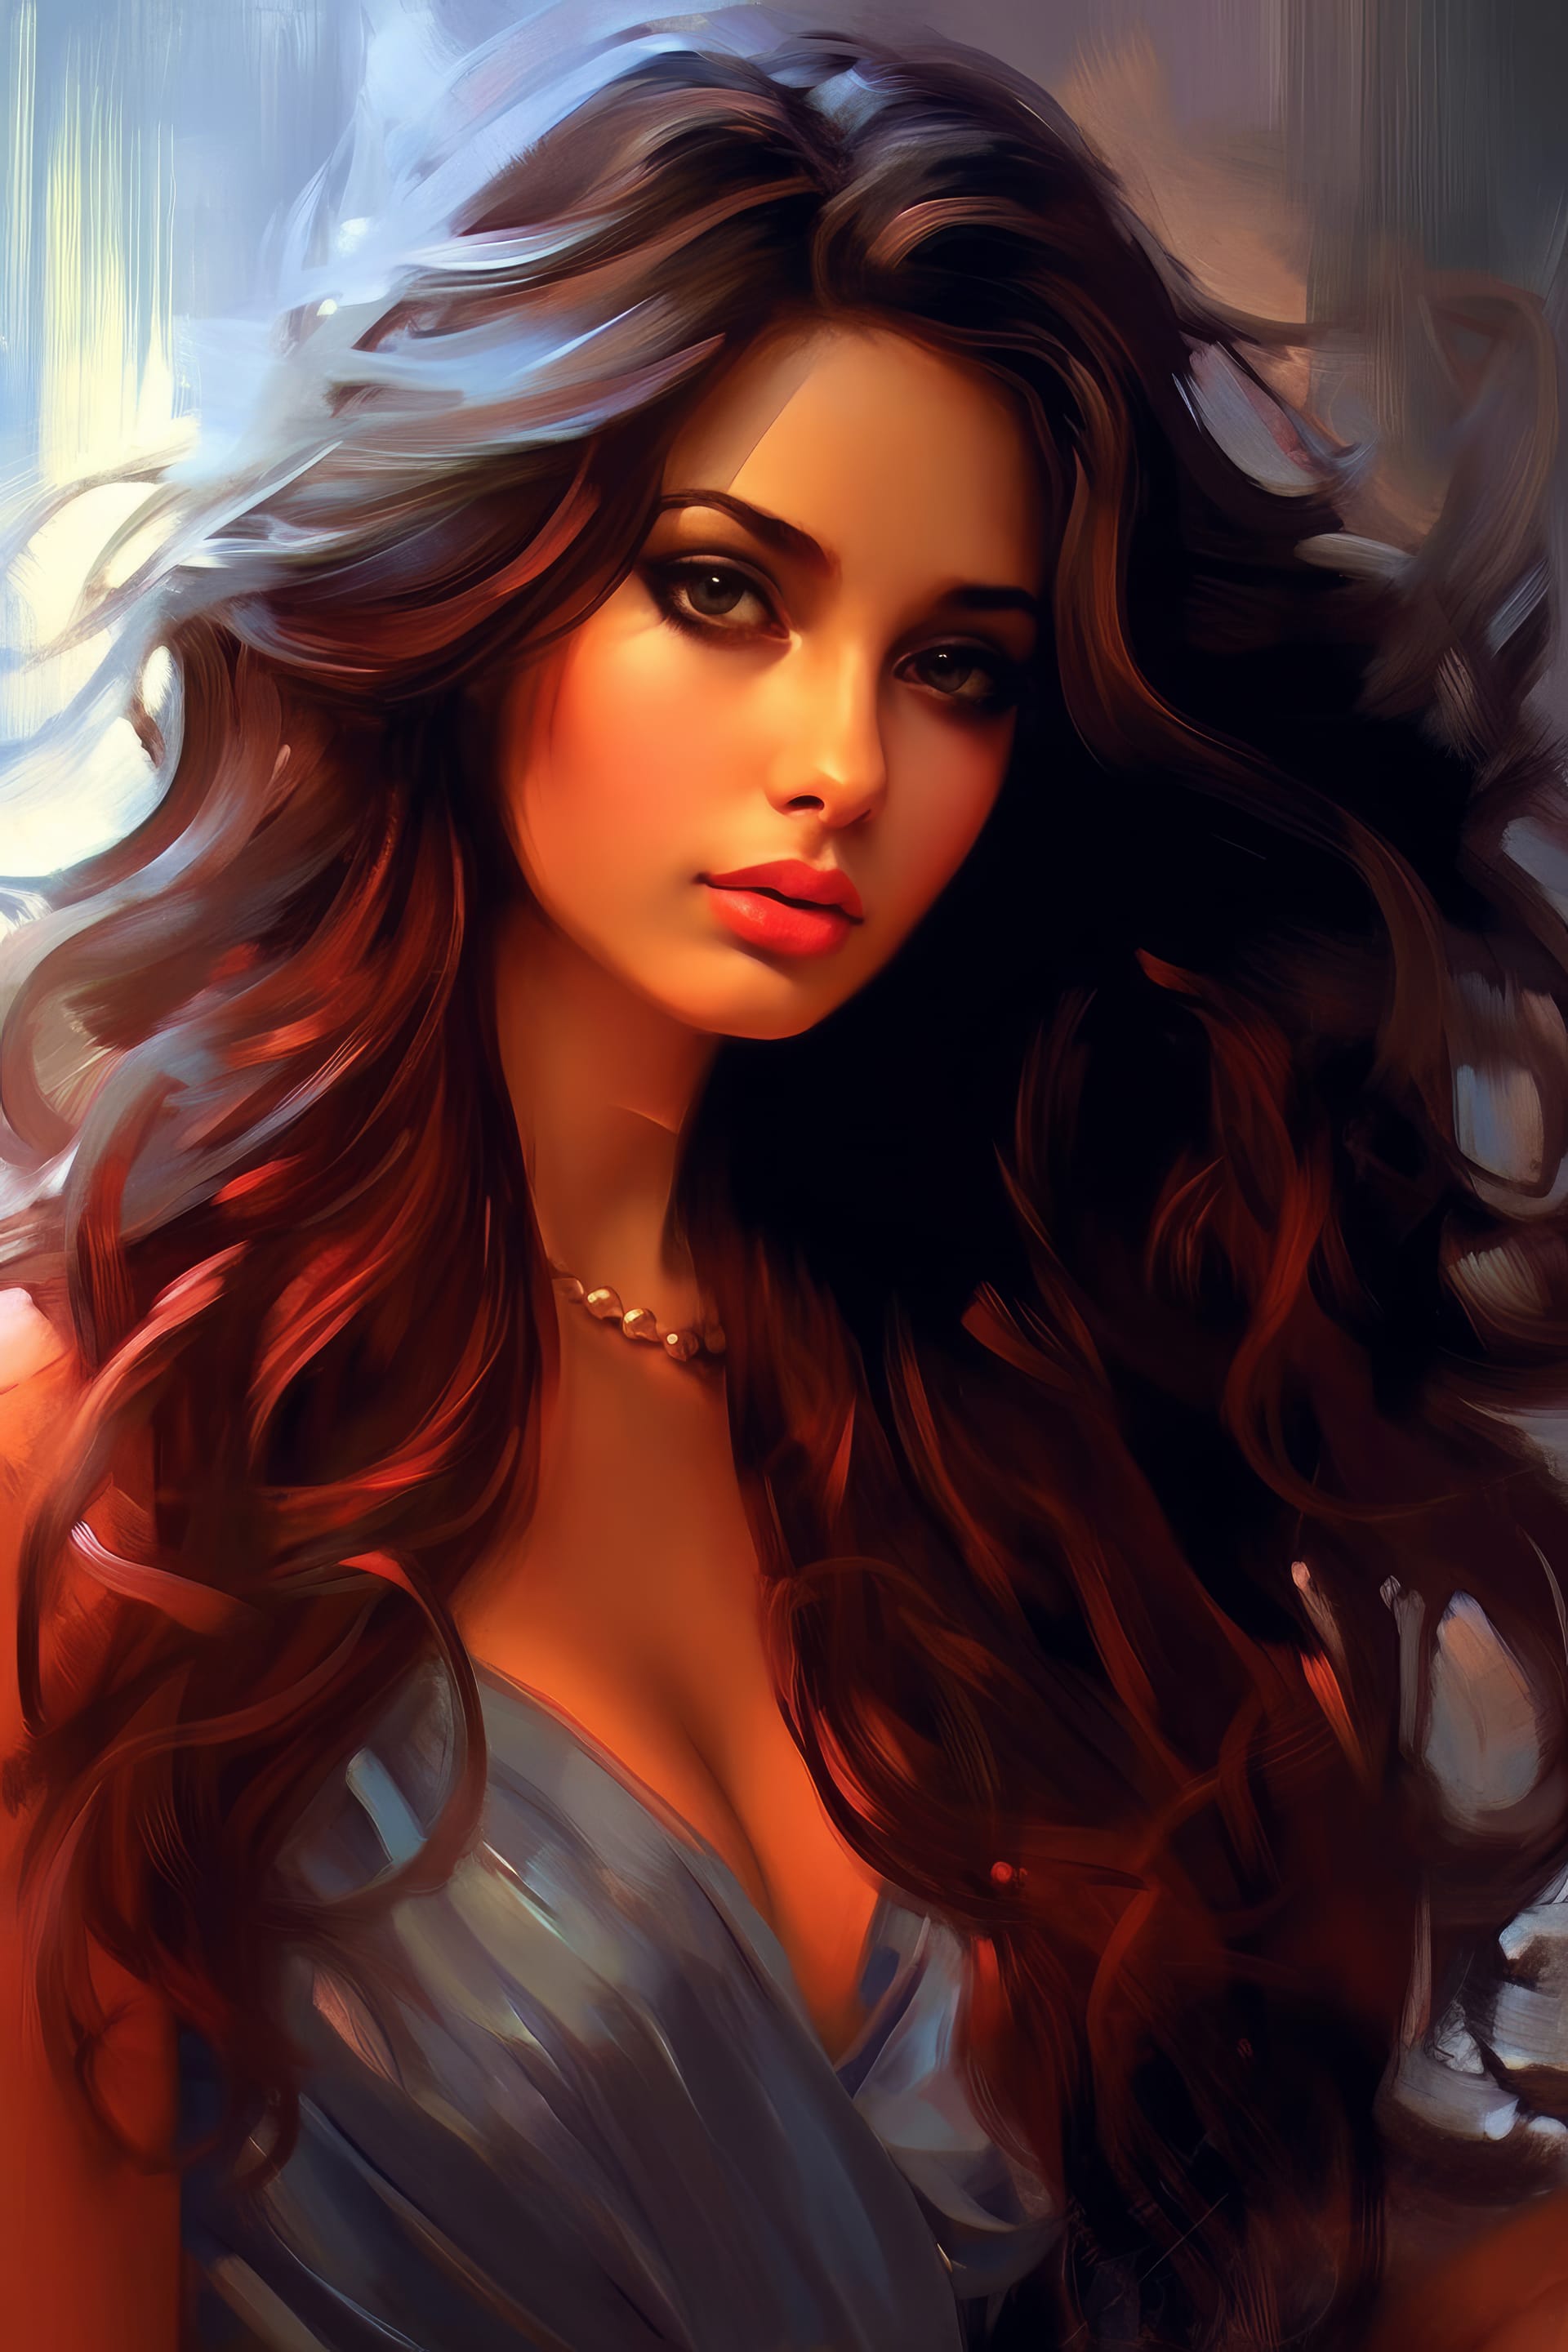 Beautiful painting woman with beautiful long hair blue dress image